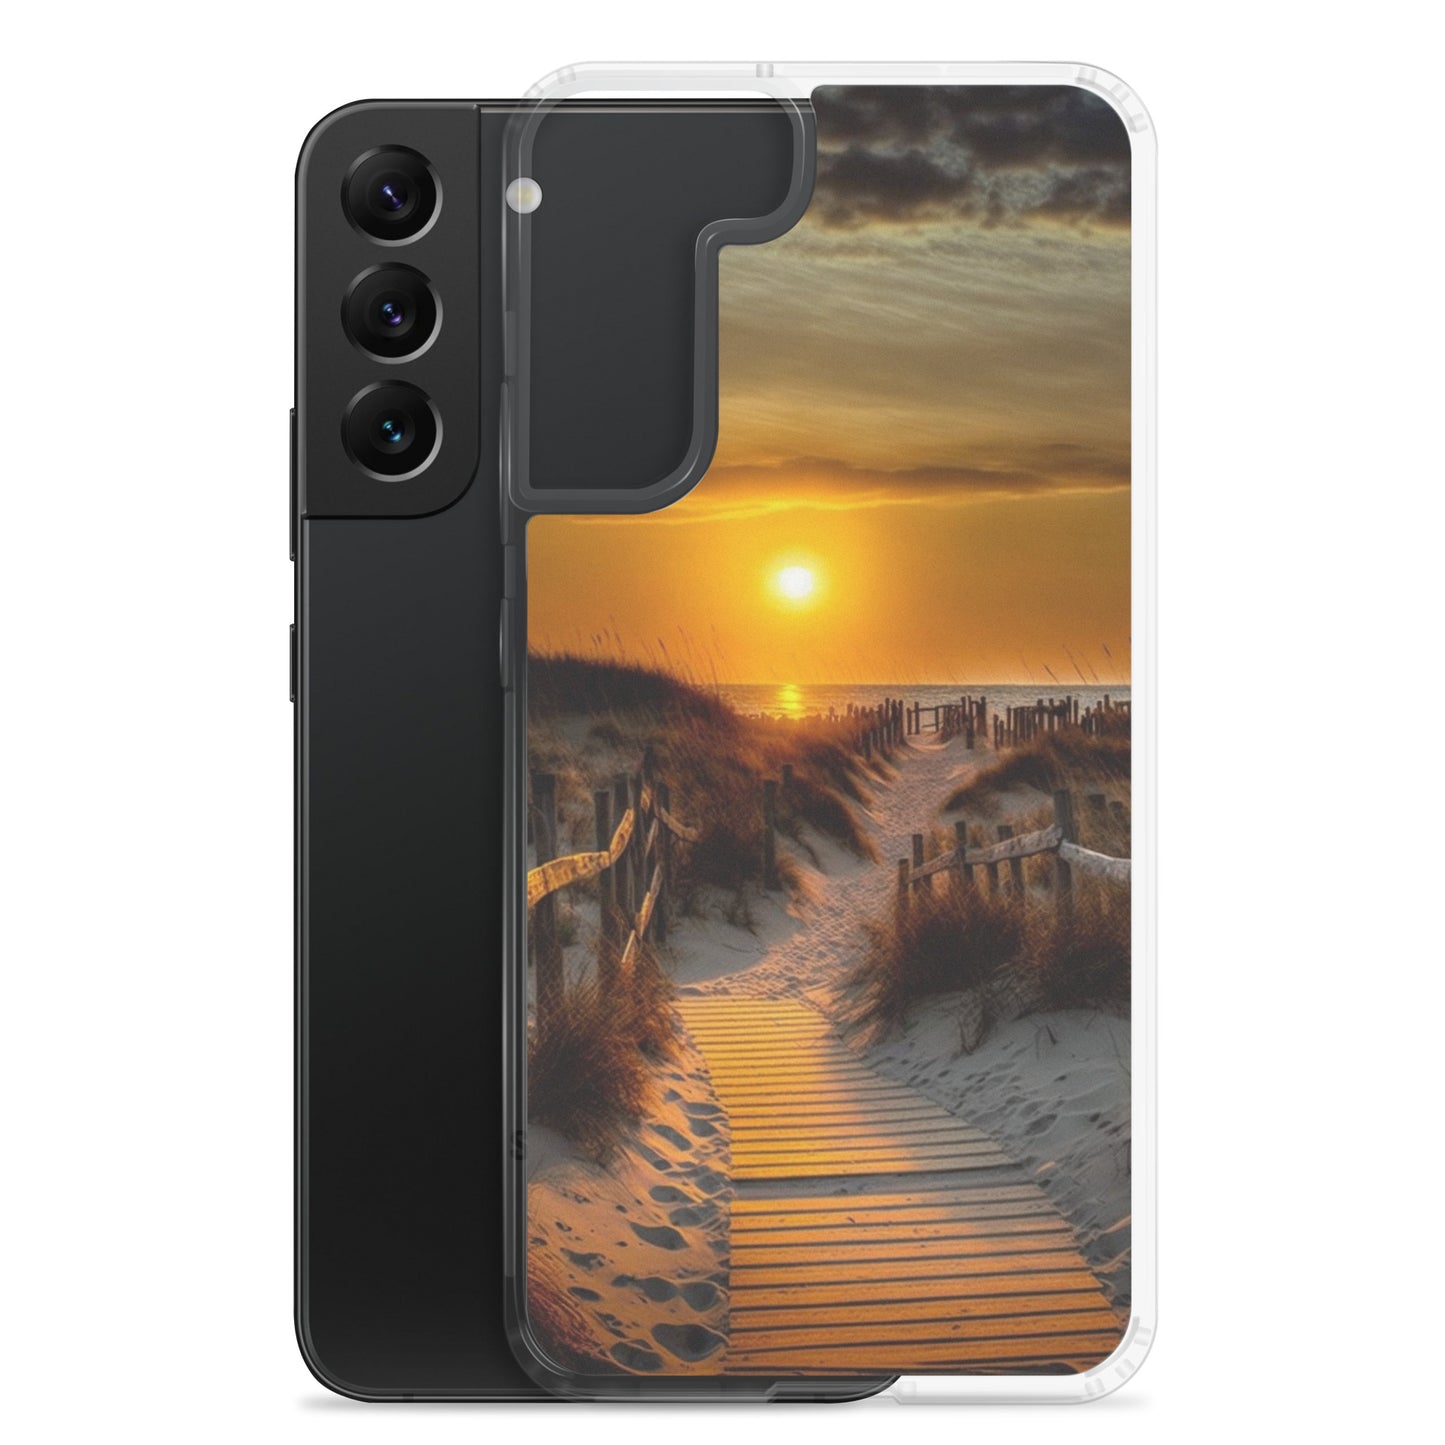 Samsung Case - Beach Life - Sunset Path